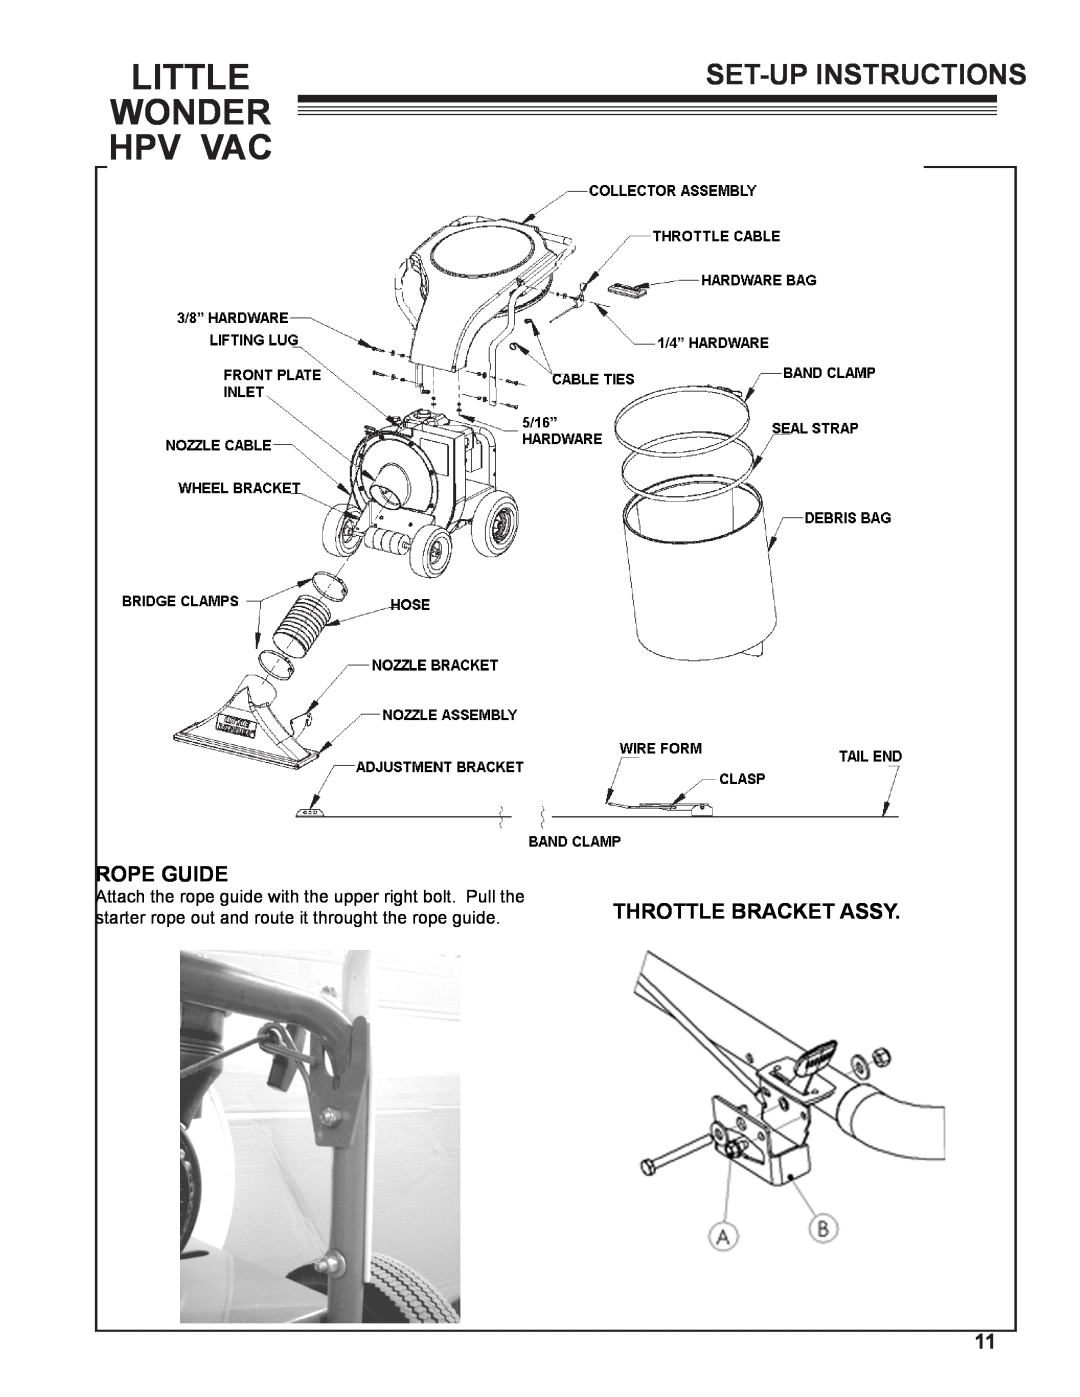 Little Wonder 5612-00-01 manual Rope Guide, Little Wonder Hpv Vac, Set-Upinstructions, Lifting Lug, Throttle Bracket Assy 